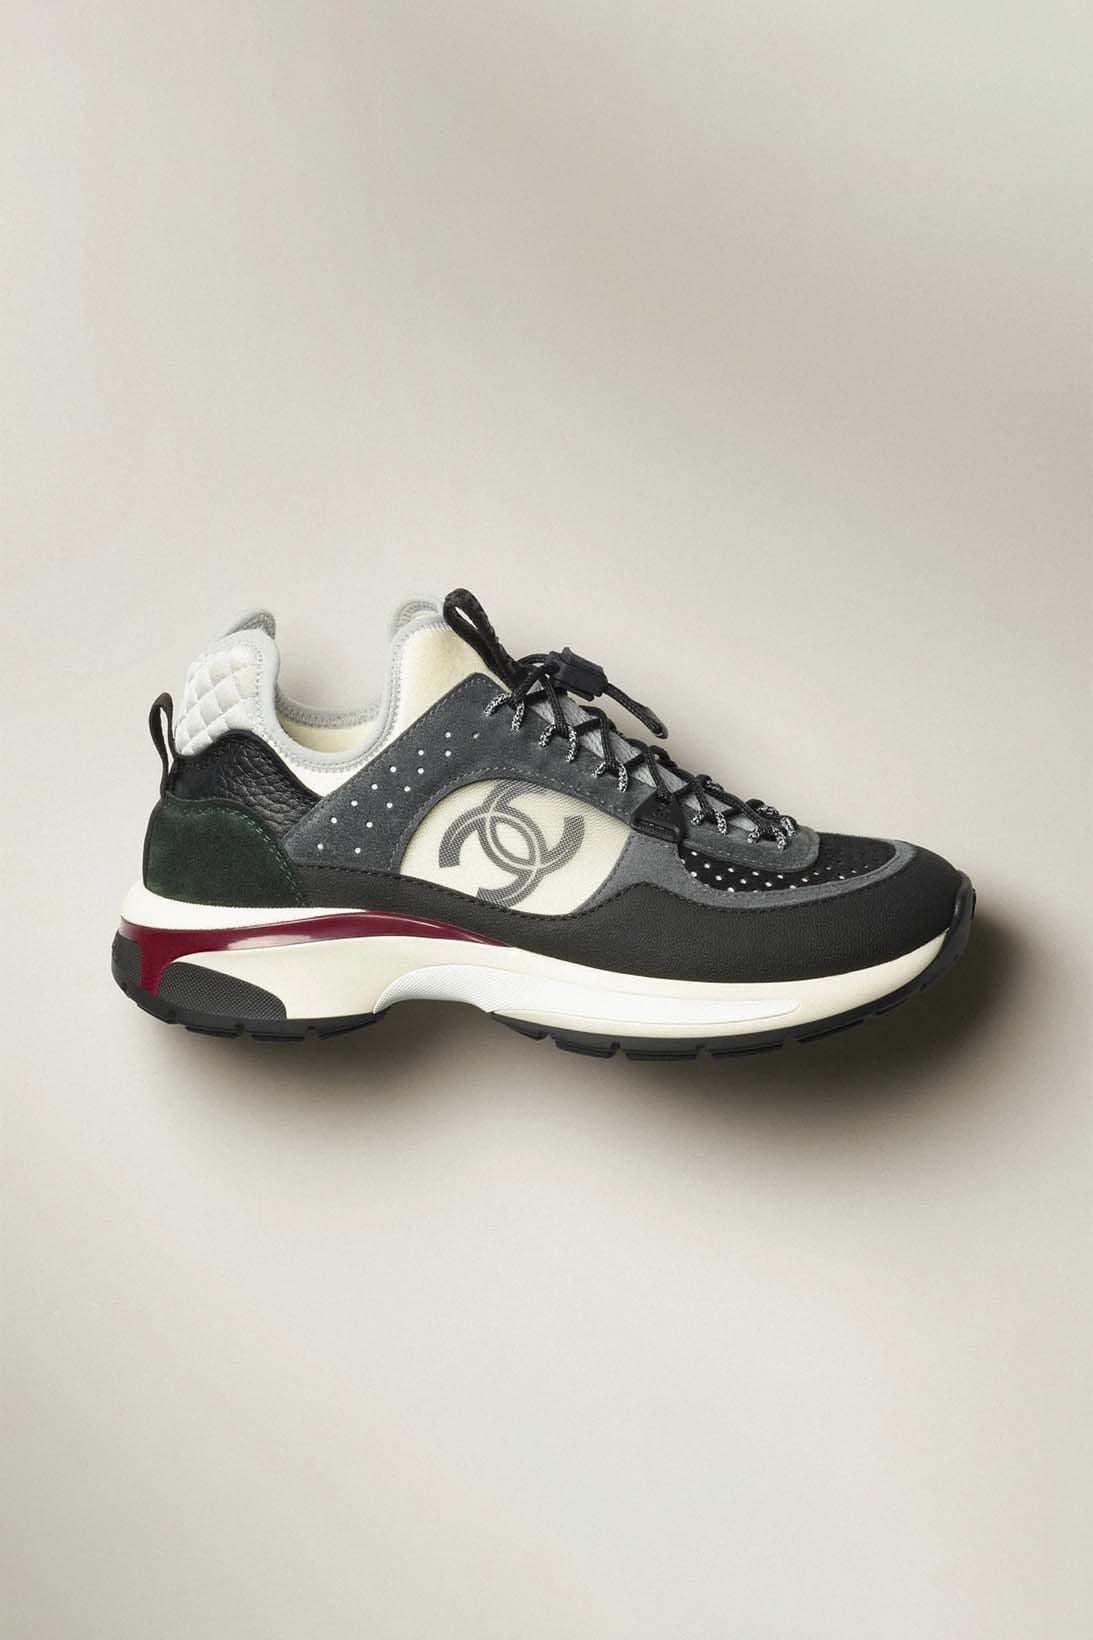 Chanel 39 Nylon, Suede & Leather CC Sport Trainer Sneakers 2 Tone  Colorblock | eBay